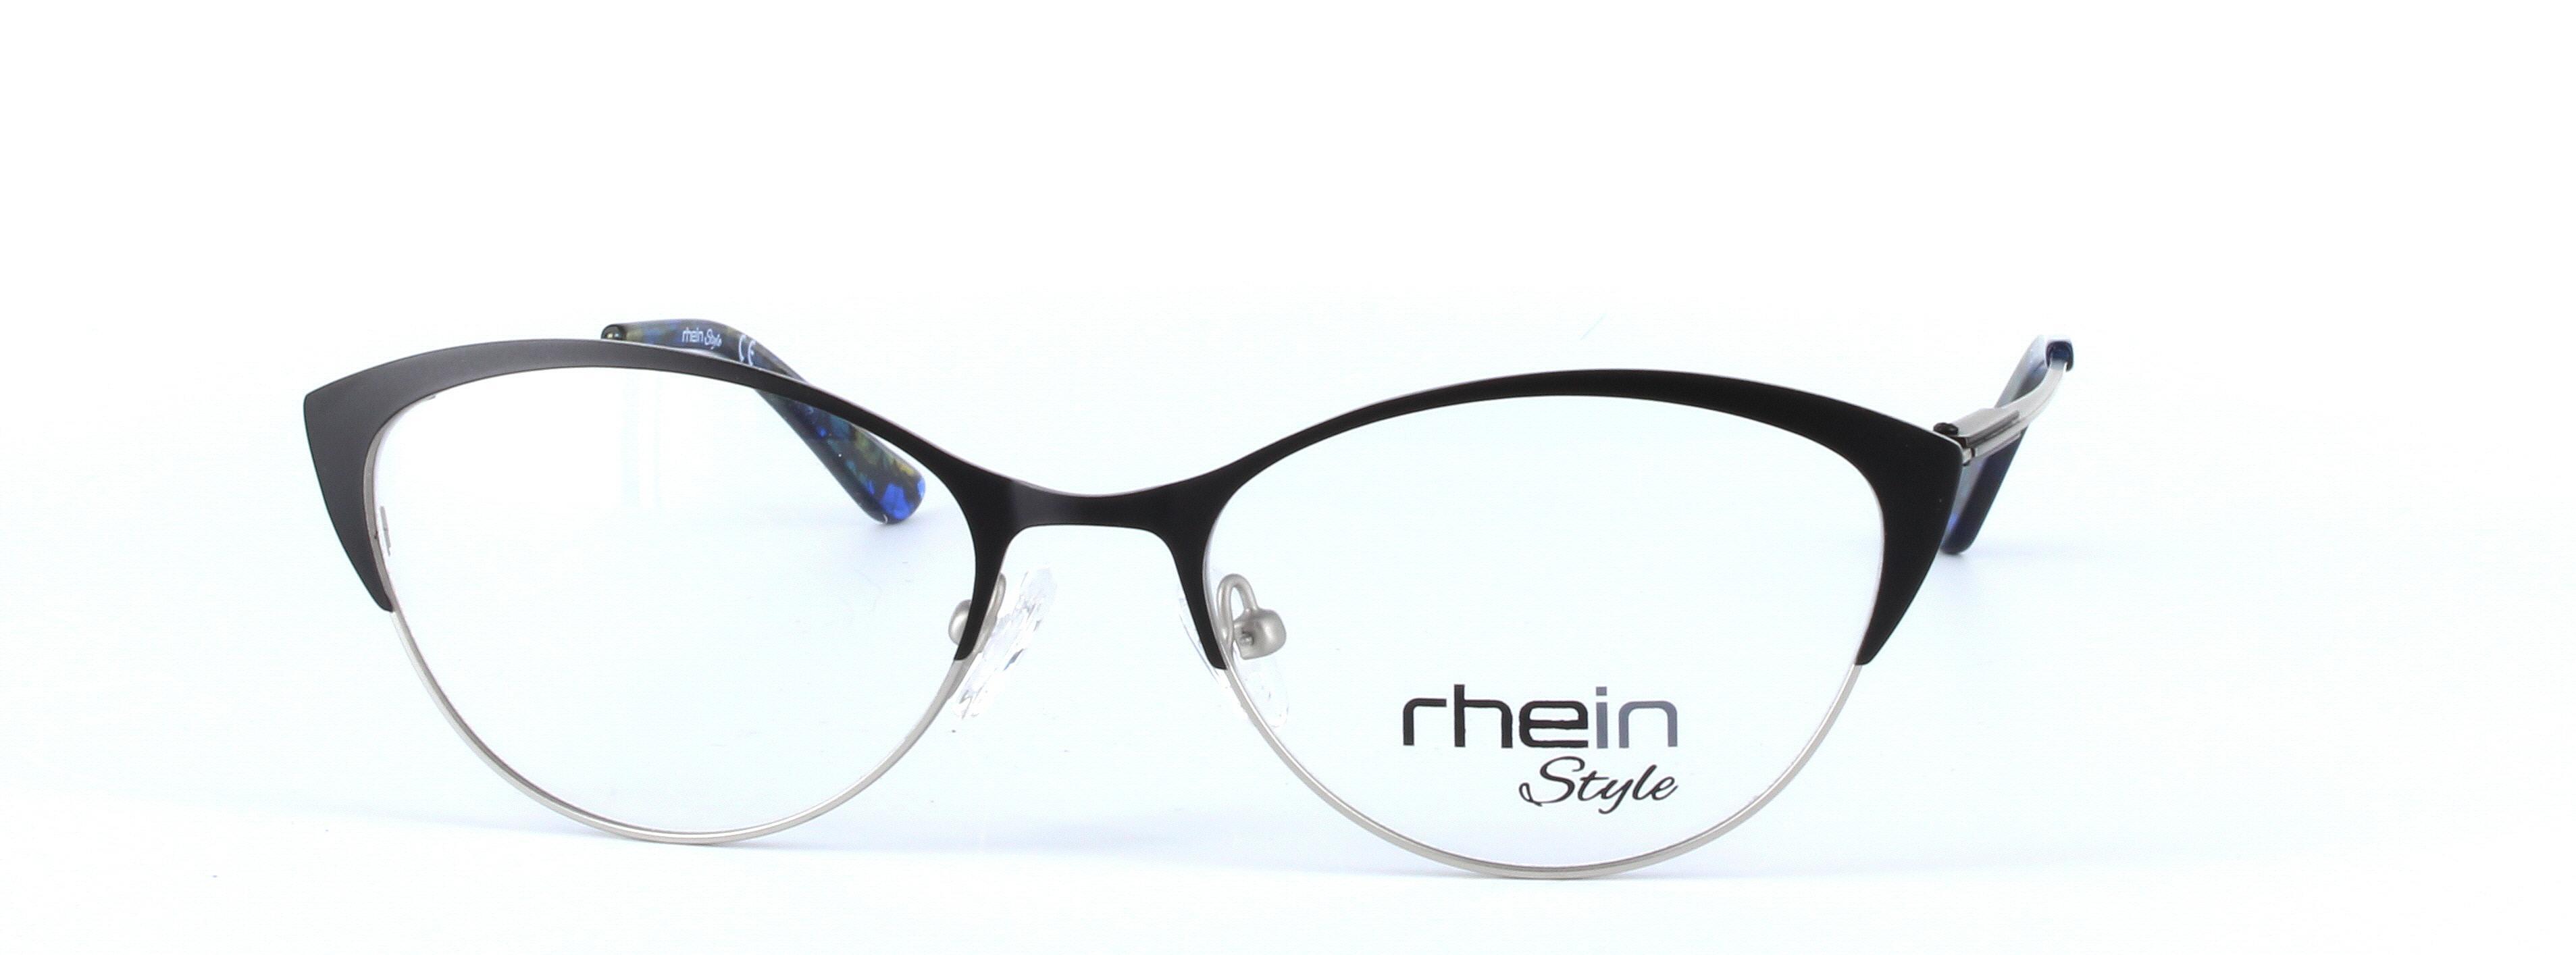 Felicity Black Full Rim Oval Round Metal Glasses - Image View 5